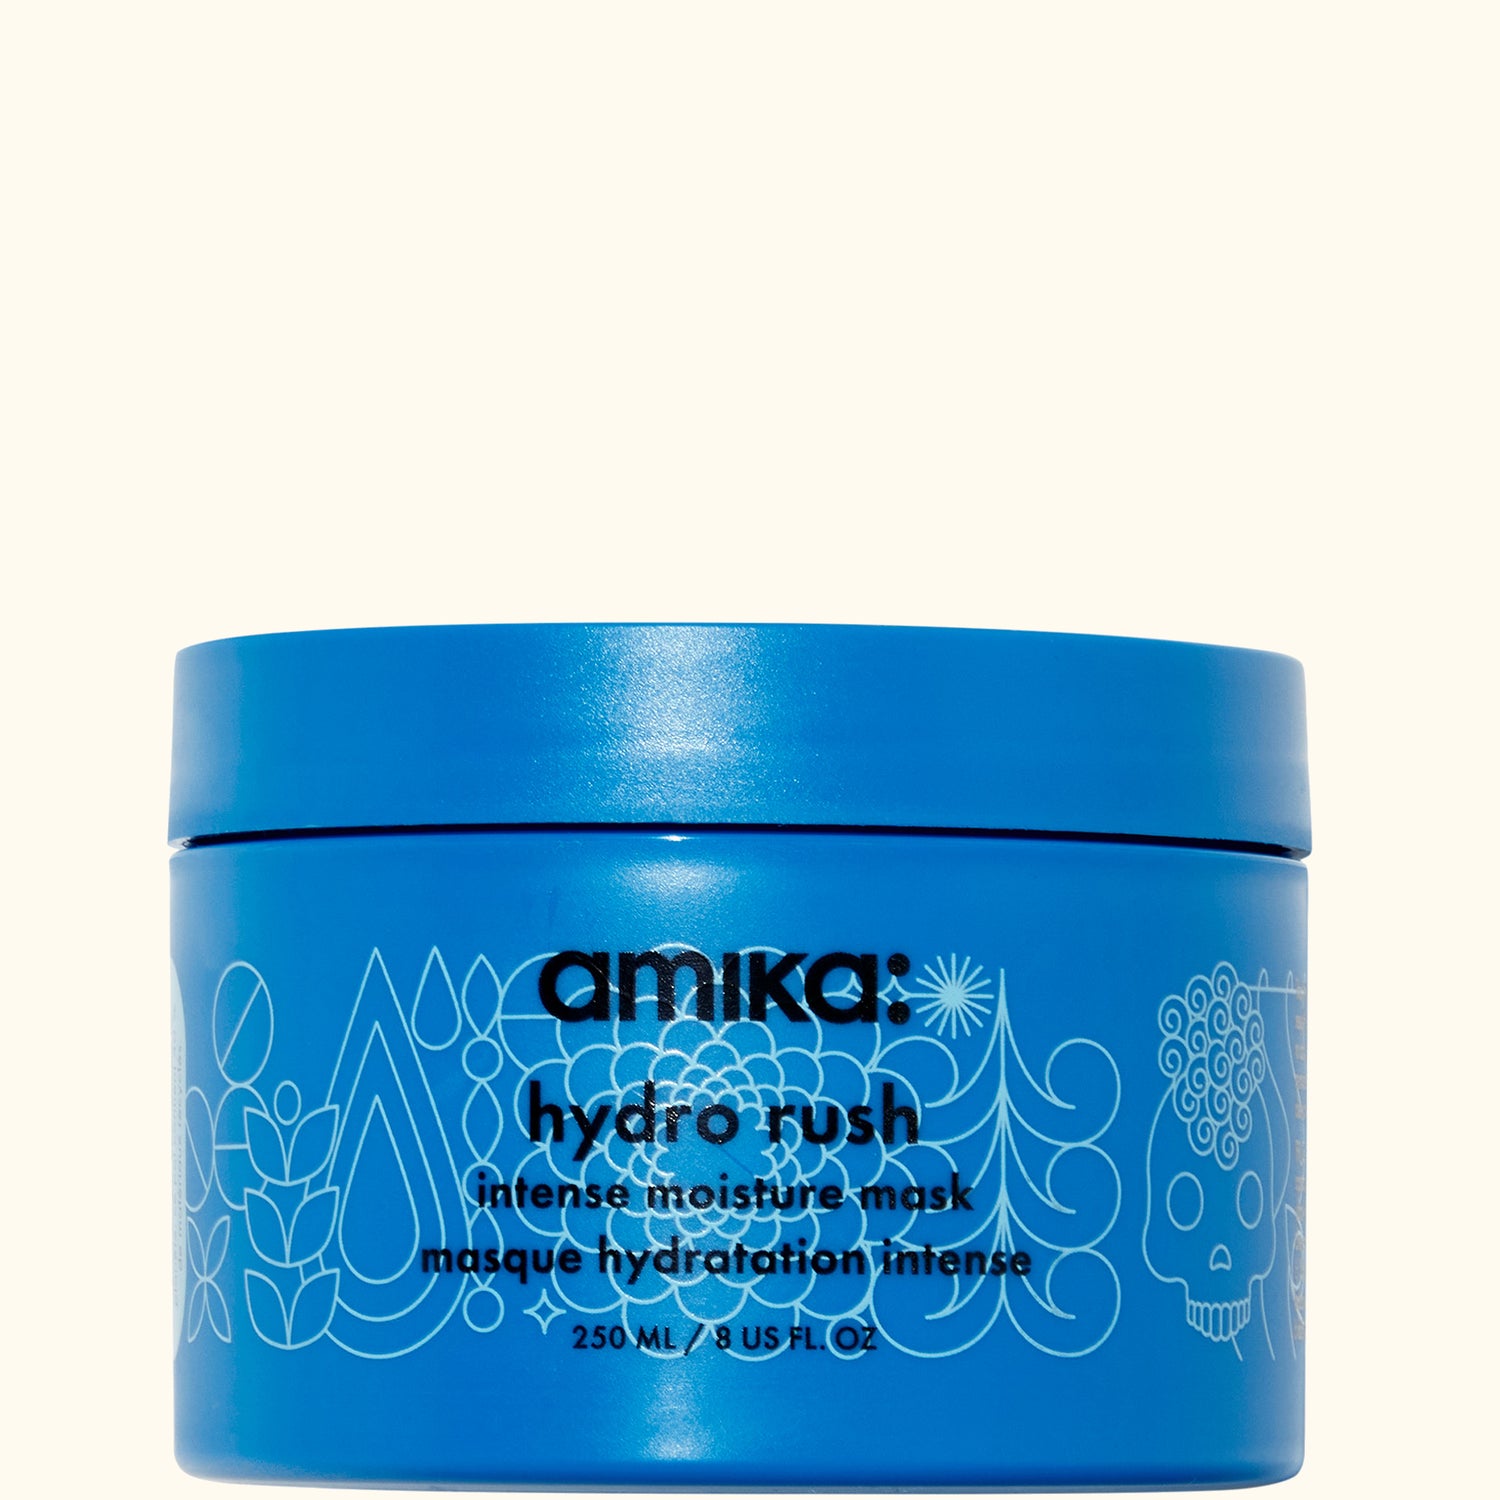 hydro rush intense moisture mask